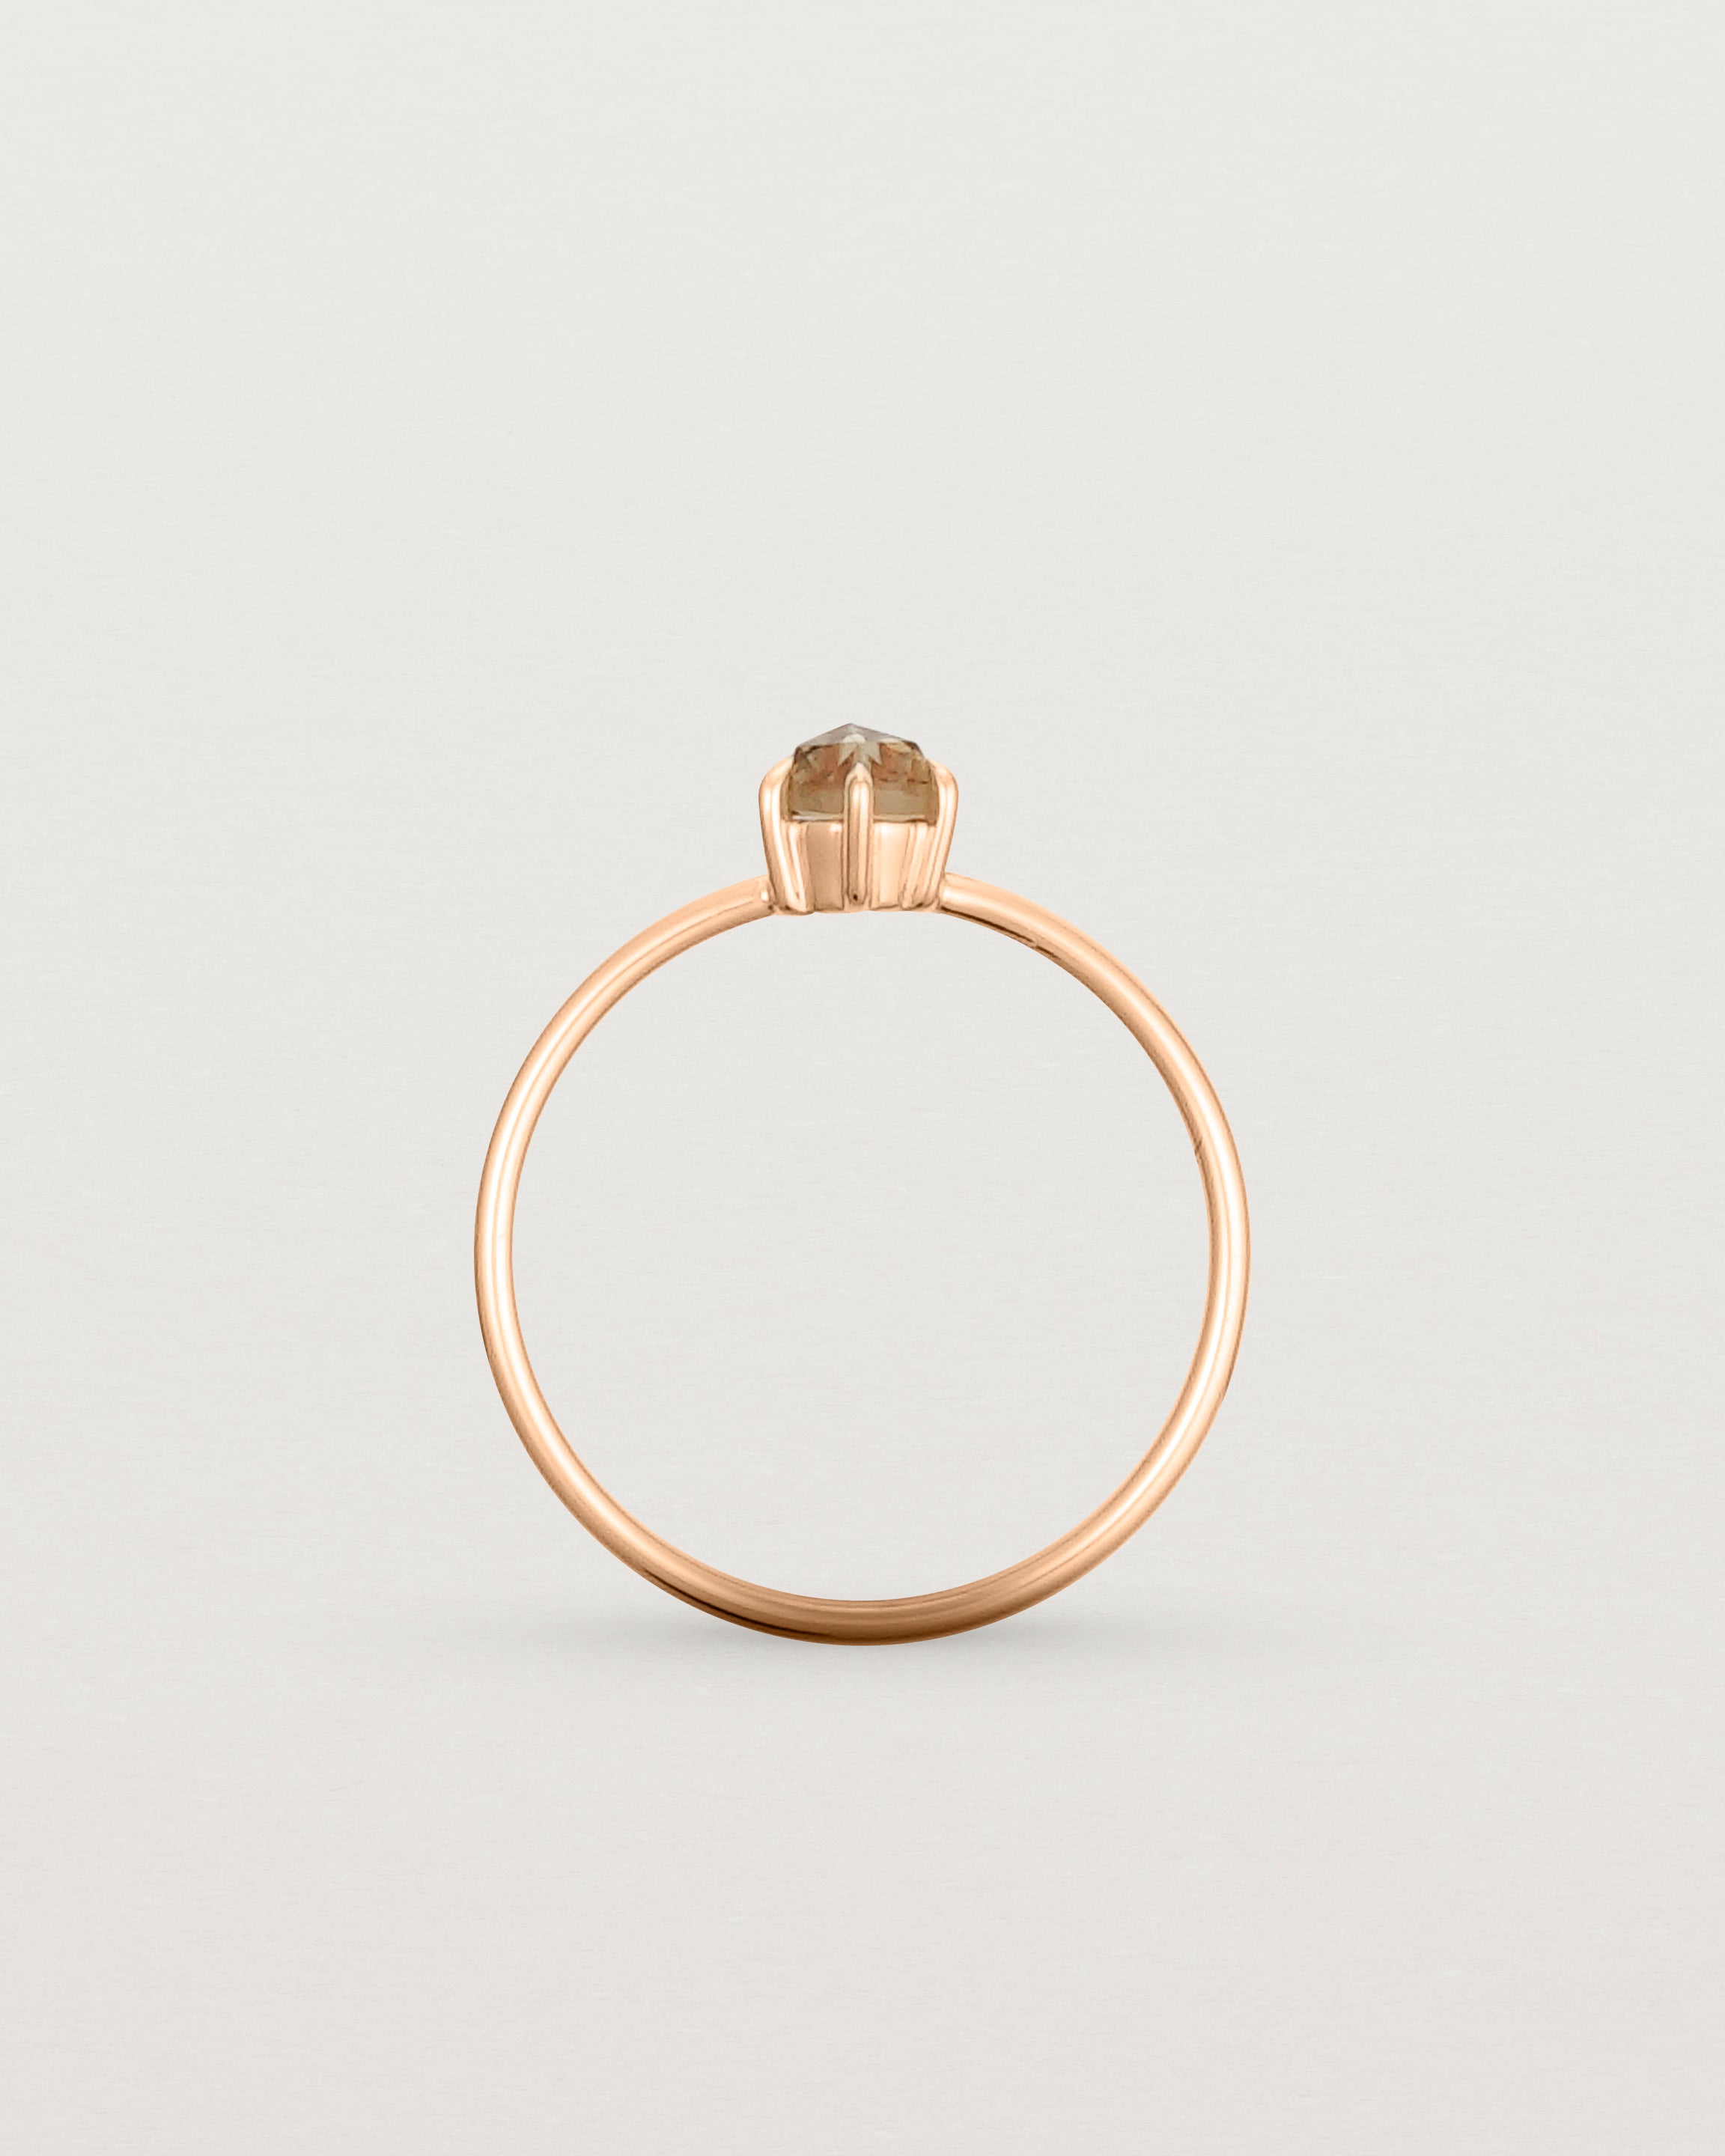 Standing view of the Tiny Rose Cut Ring | Honey Quartz | Rose Gold.